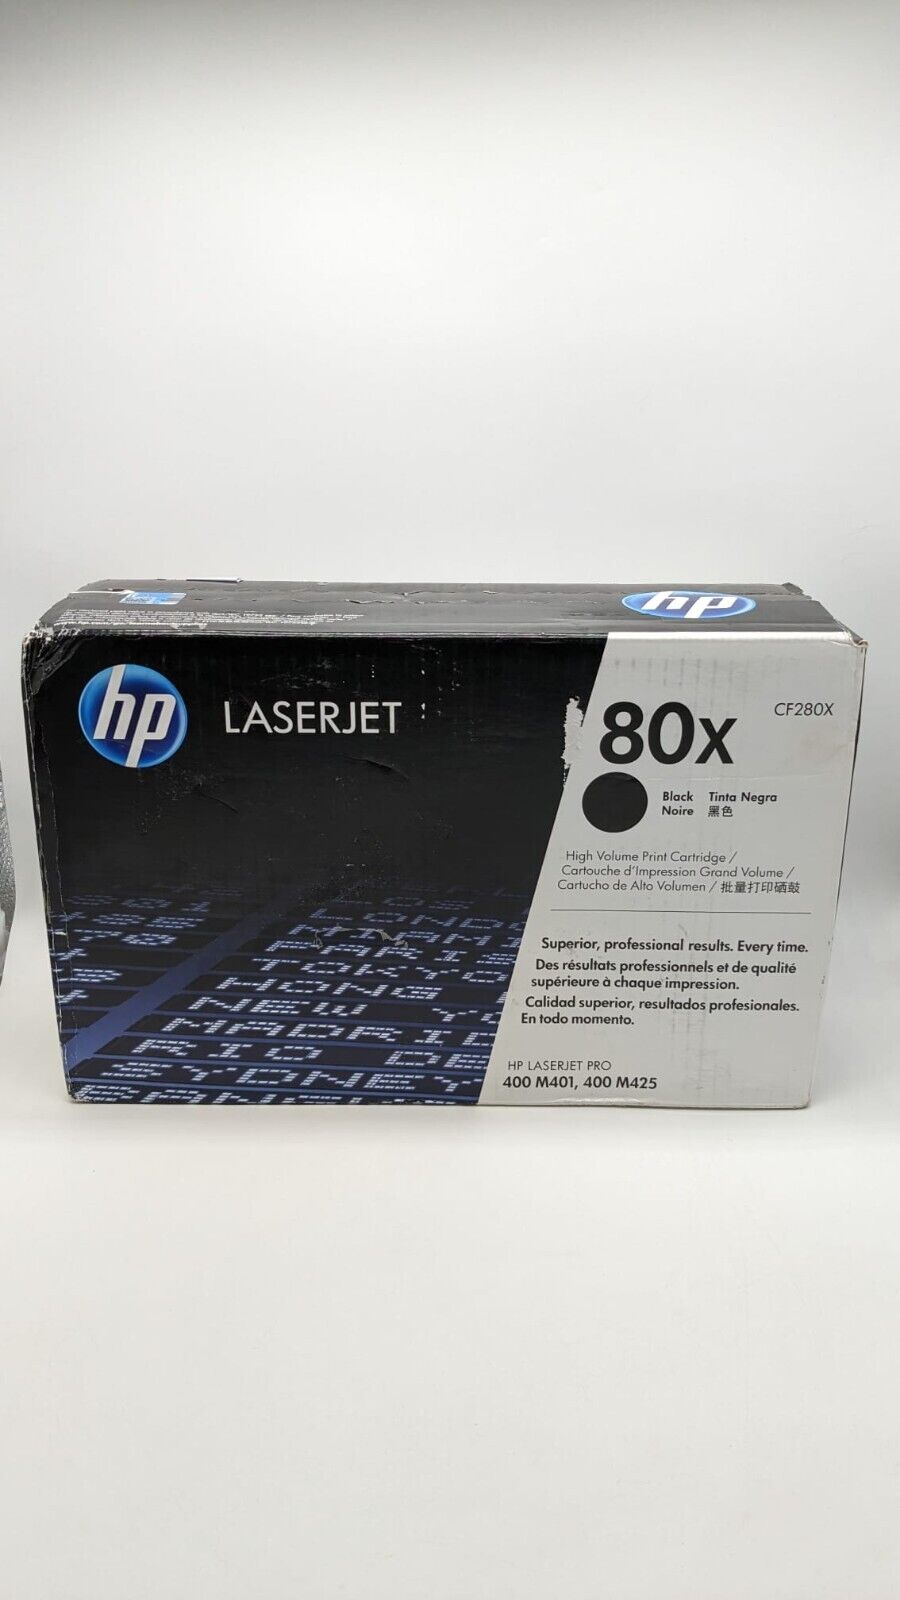 HP CF280X 80X LaserJet Pro Black Toner Cartridge Original High Yield Ink 1 box